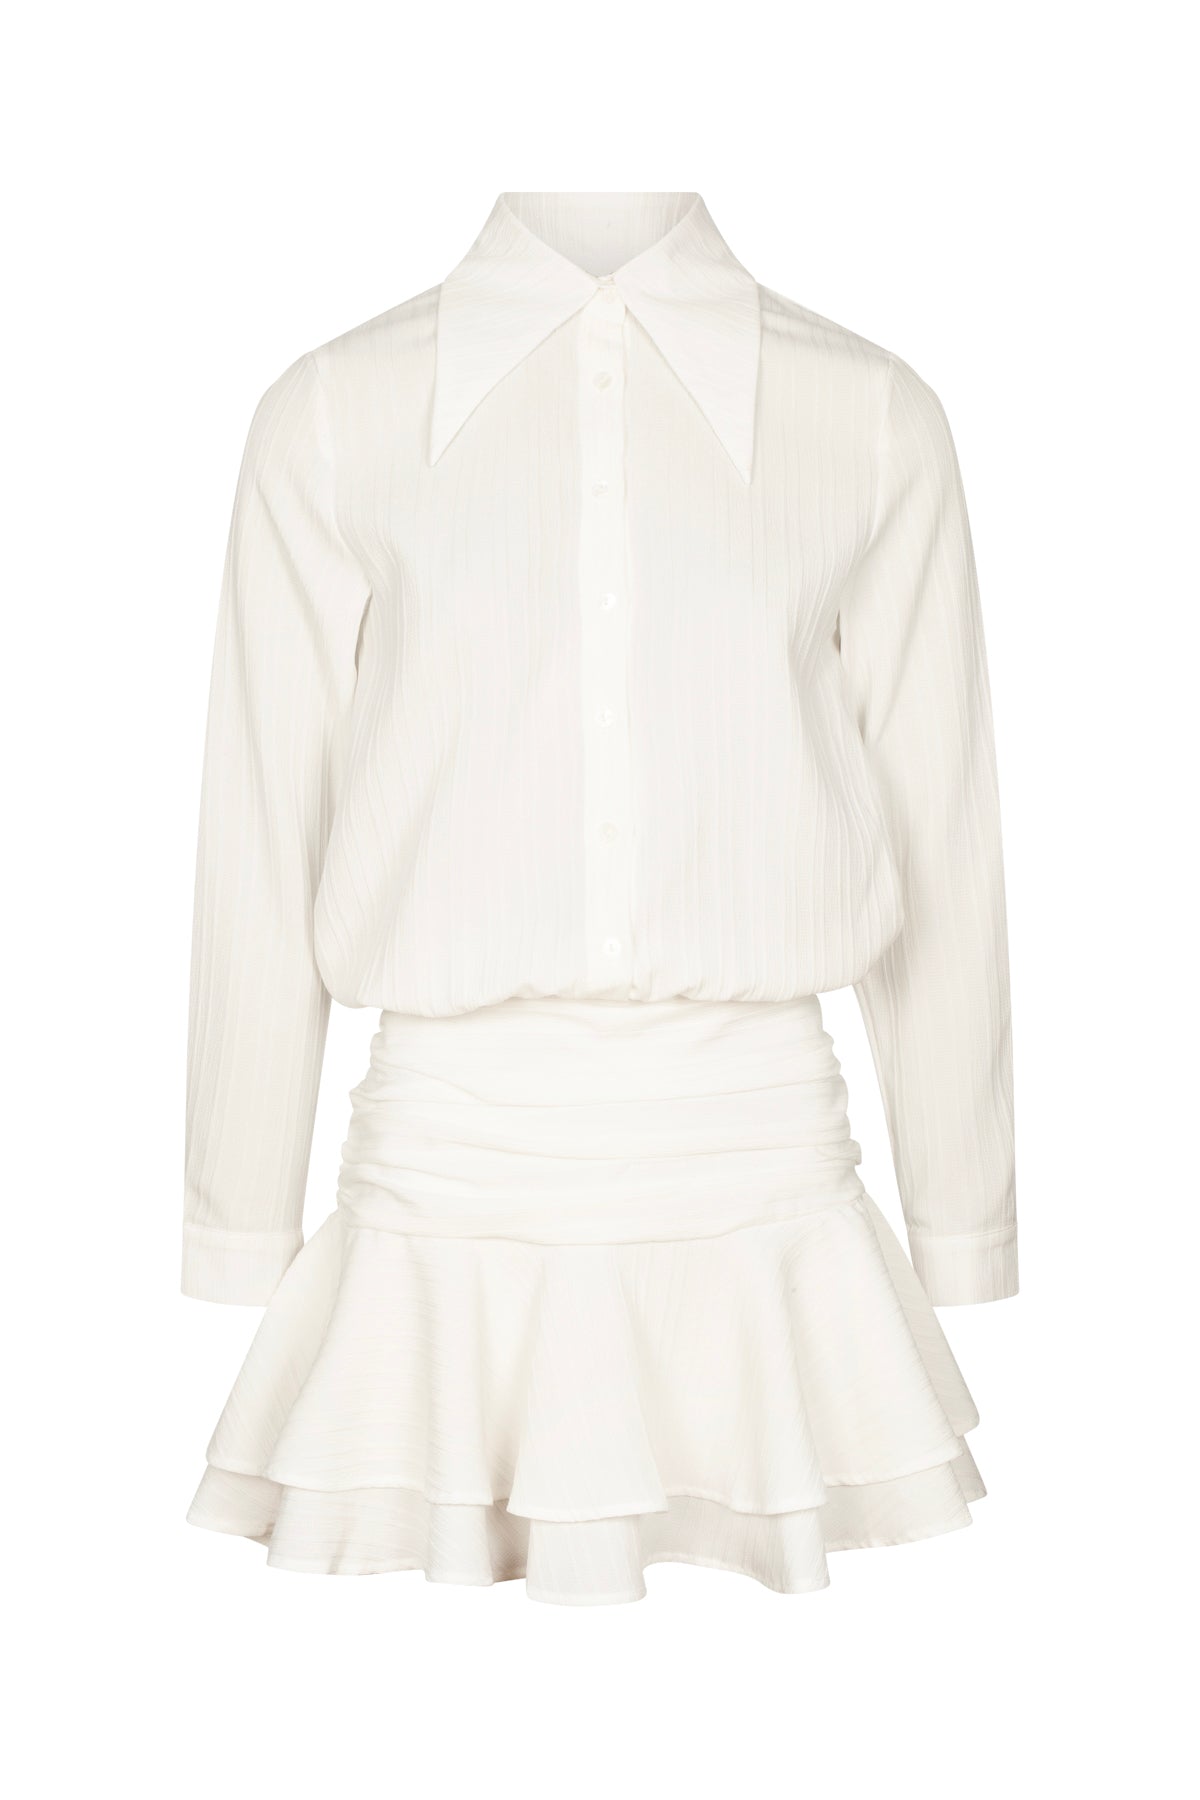 ALELI White Textured Ruffle Mini Dress